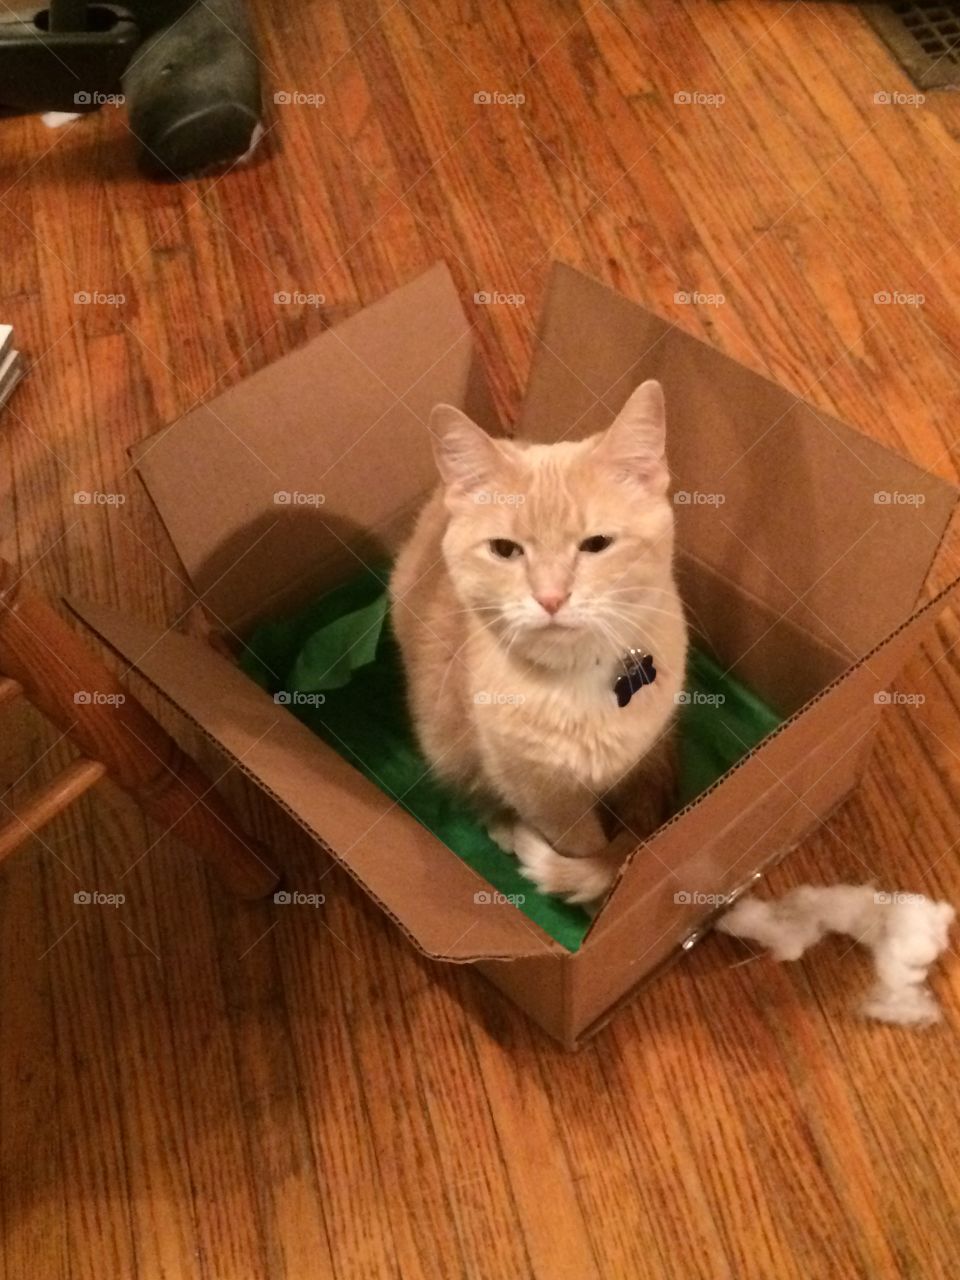 Boxed up kitten 